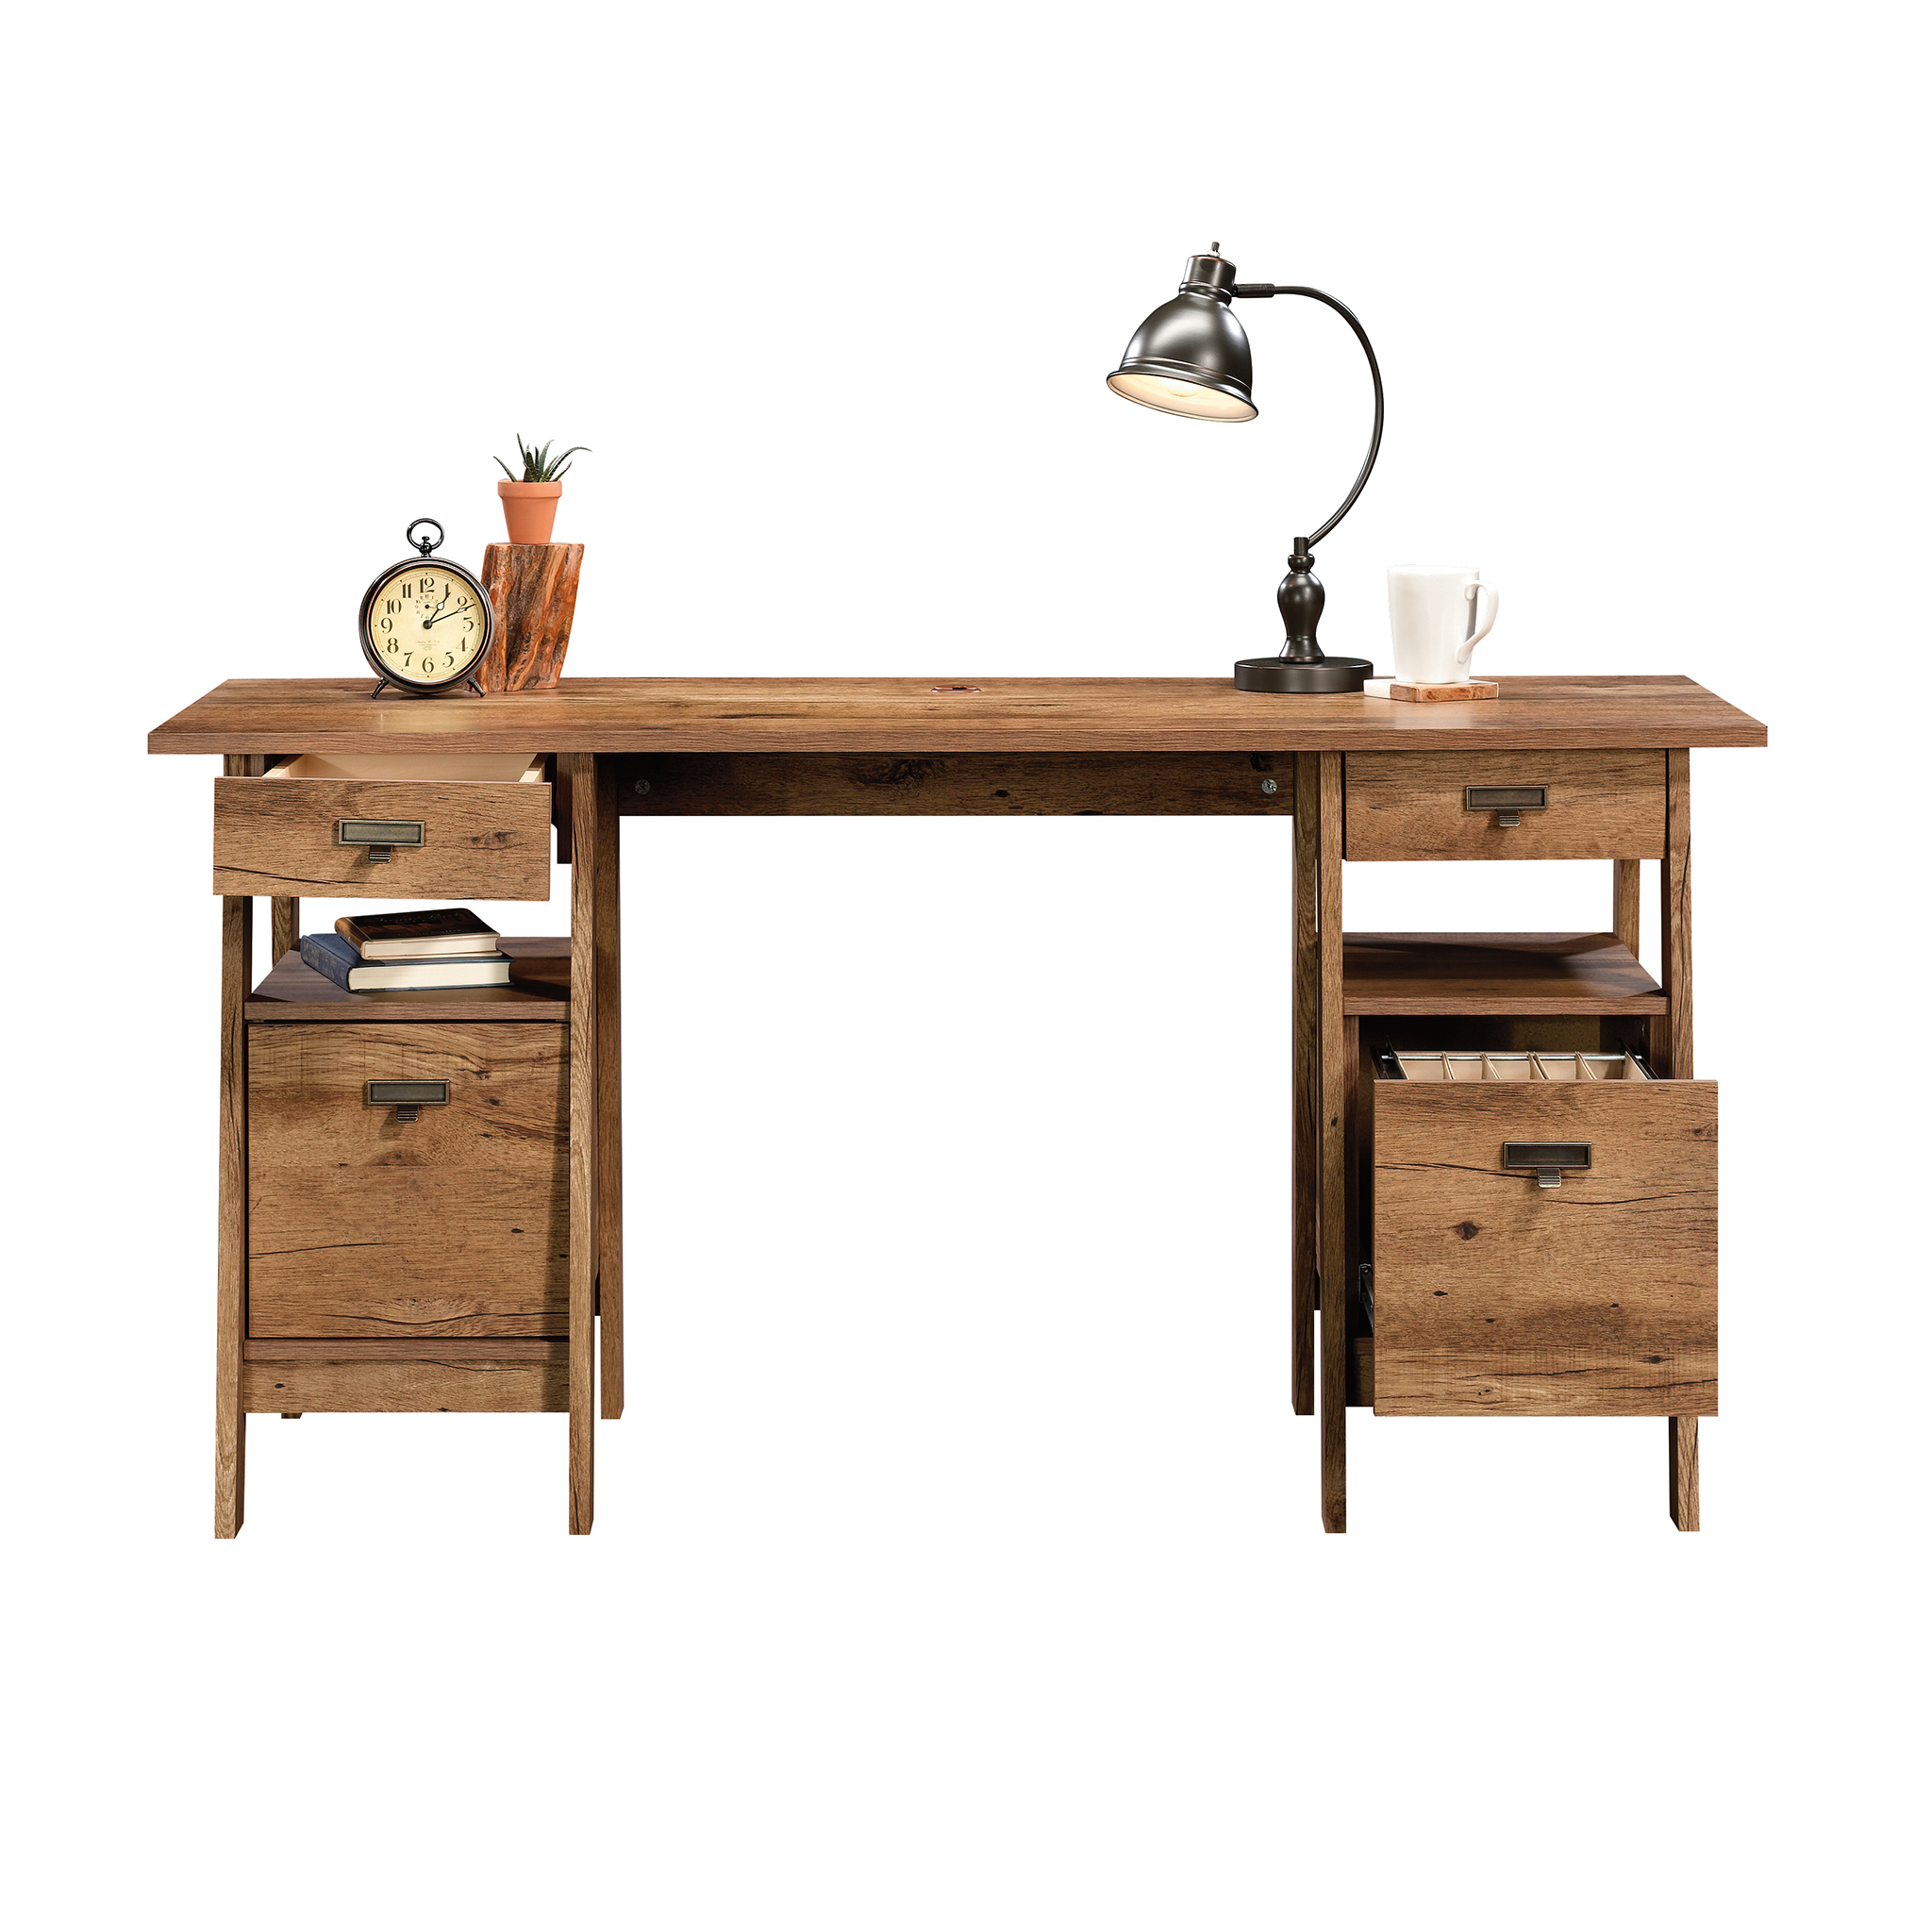 Sauder Trestle Executive Trestle Desk Vintage Oak finish